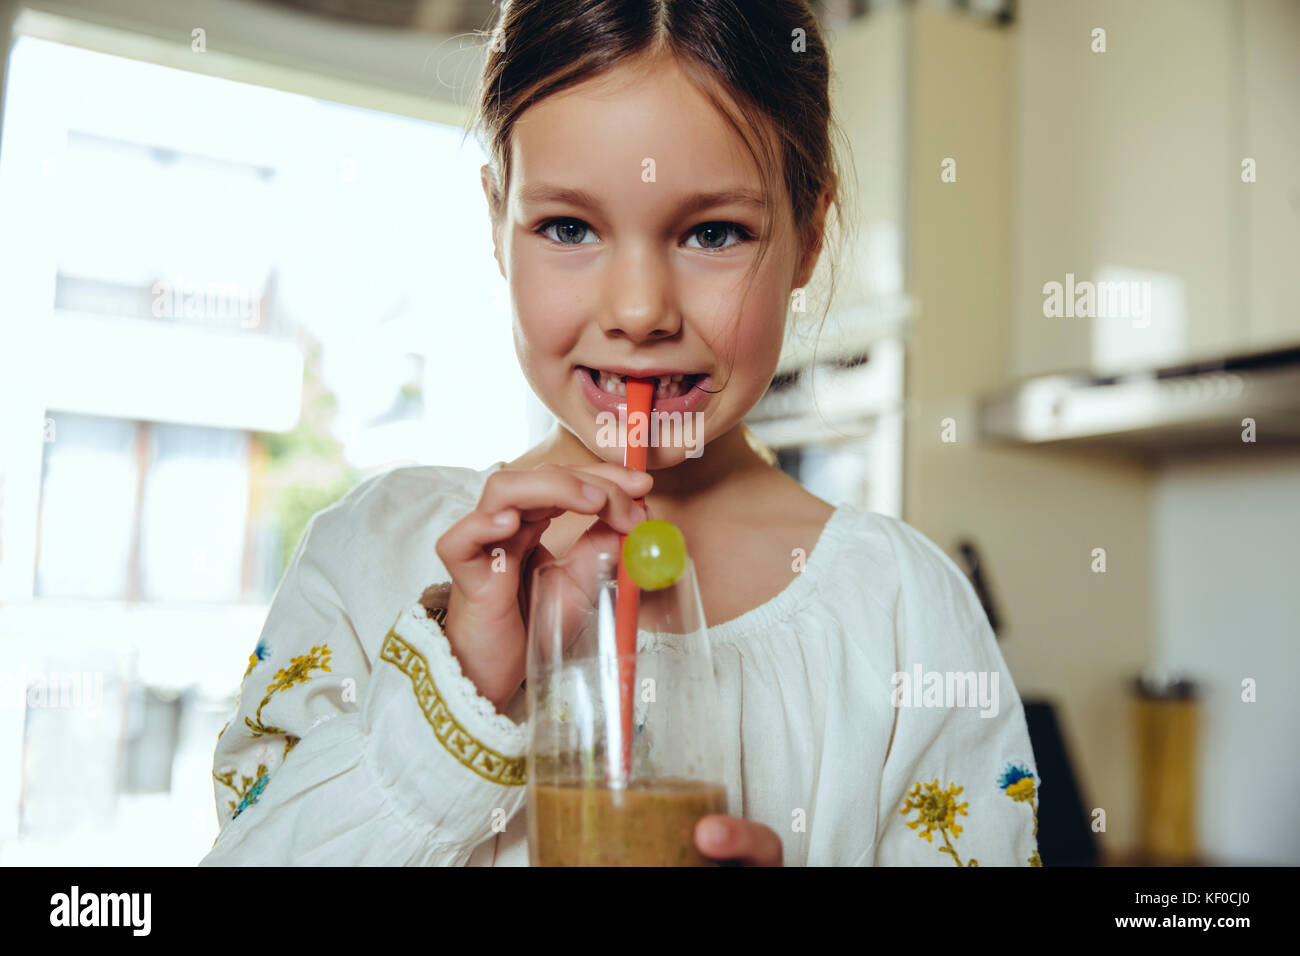 Girl enjoying her homemade smoothie Stock Photo